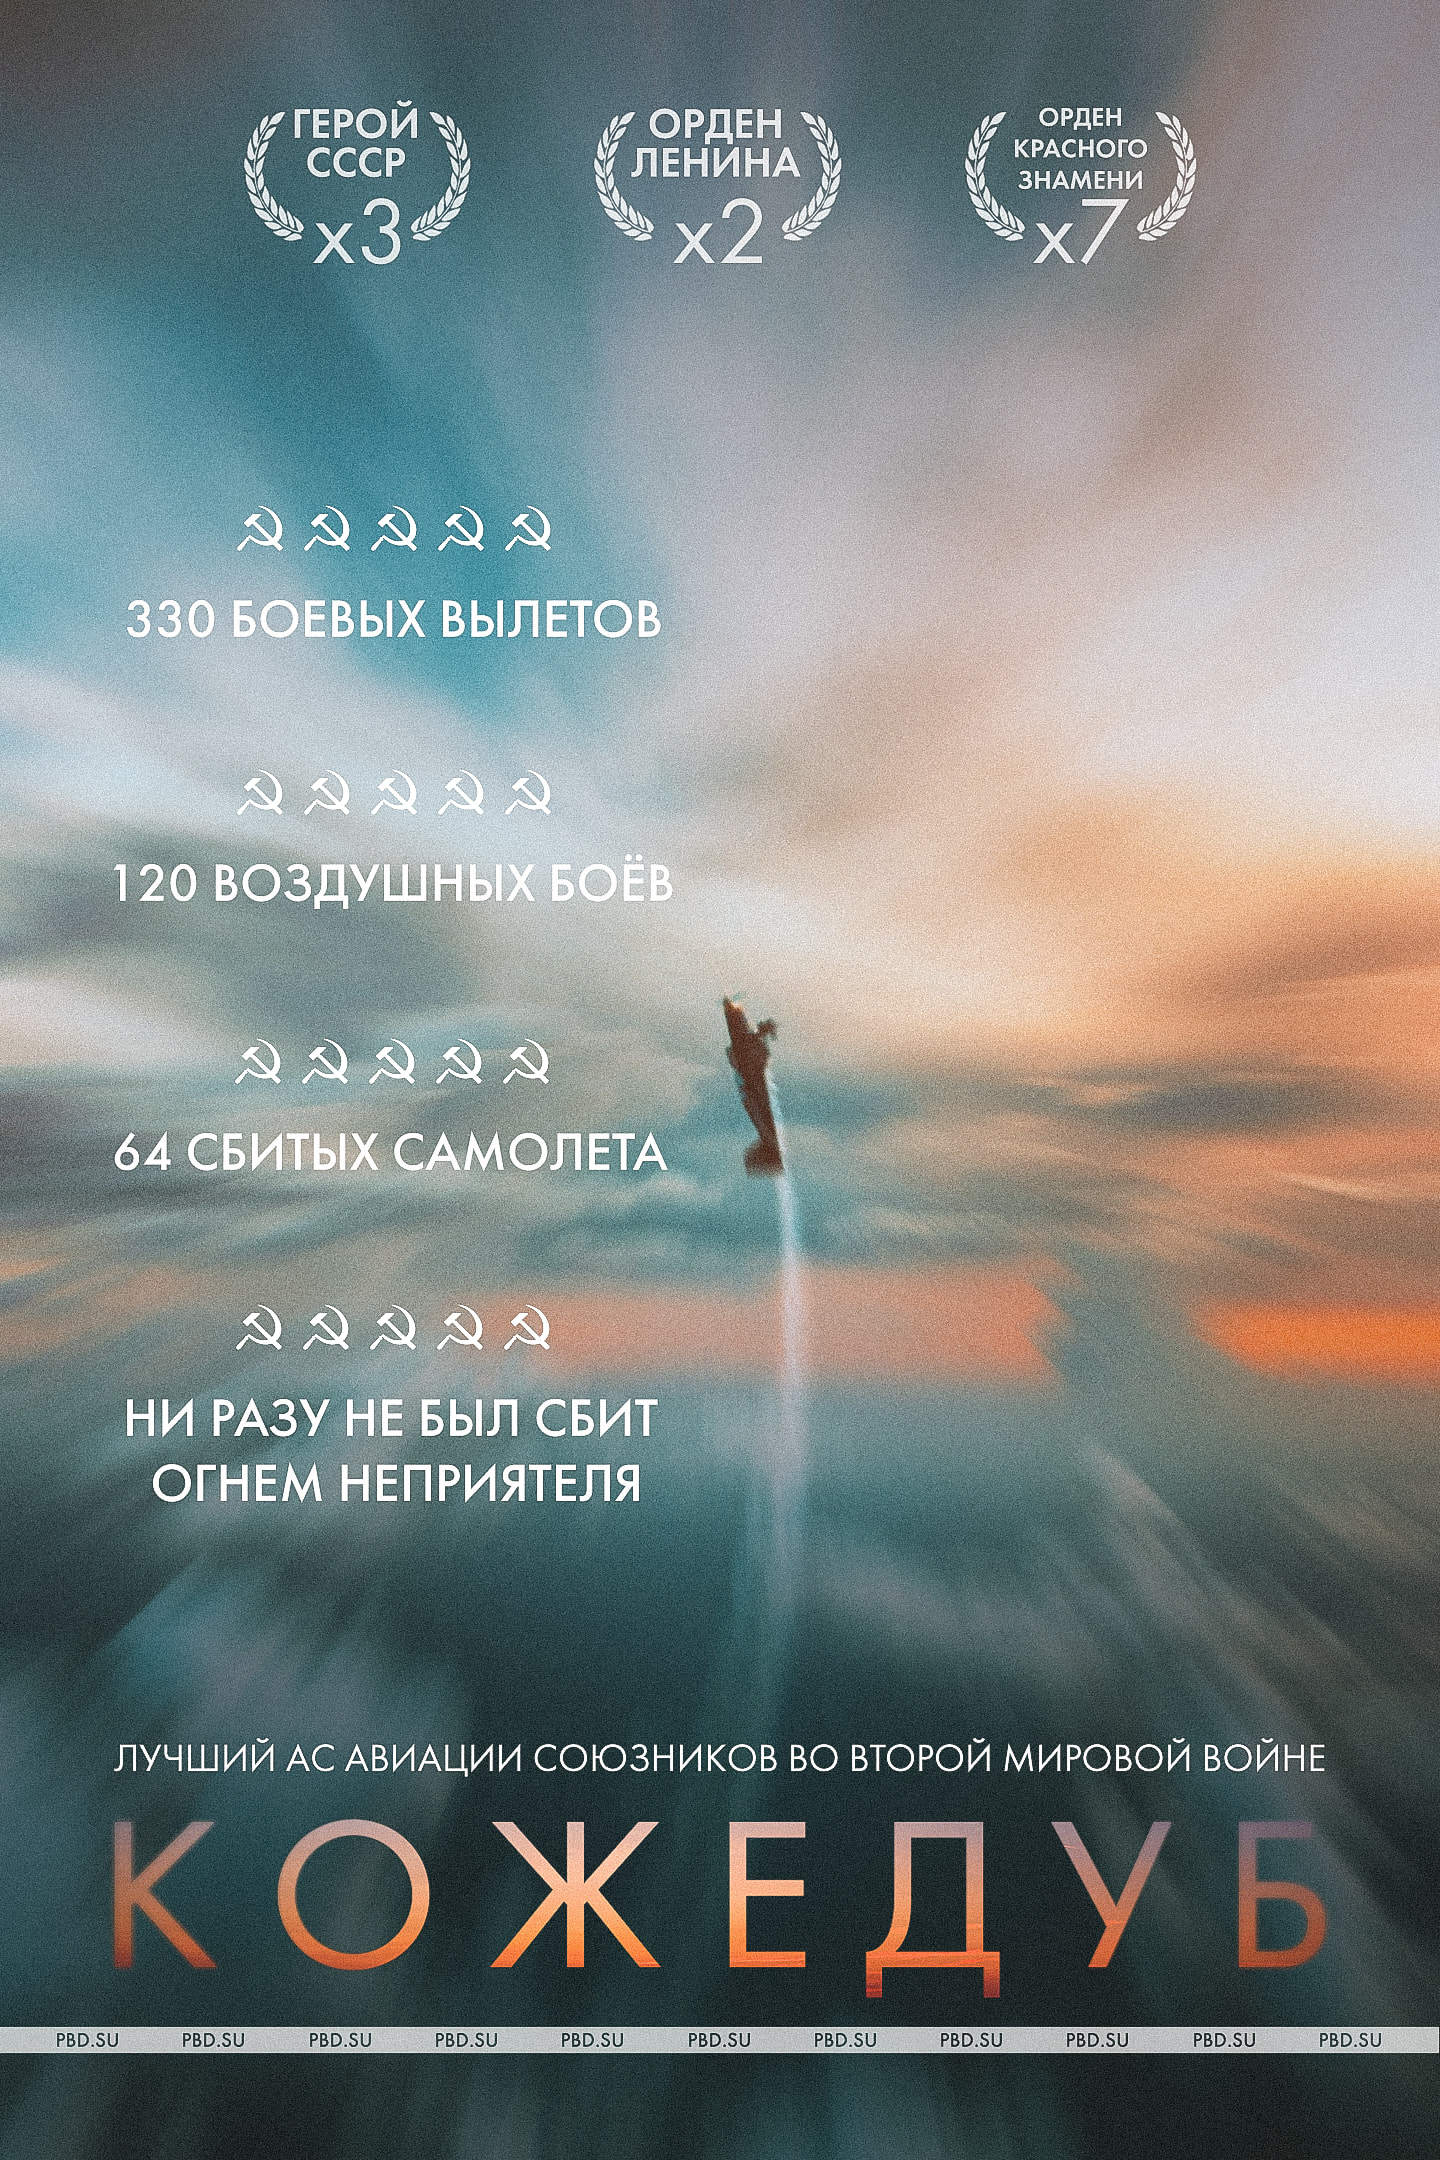 Ivan Kozhedub is one hundred! - My, date, Story, the USSR, Aviation, Ivan Kozhedub, The Great Patriotic War, Poster, Longpost